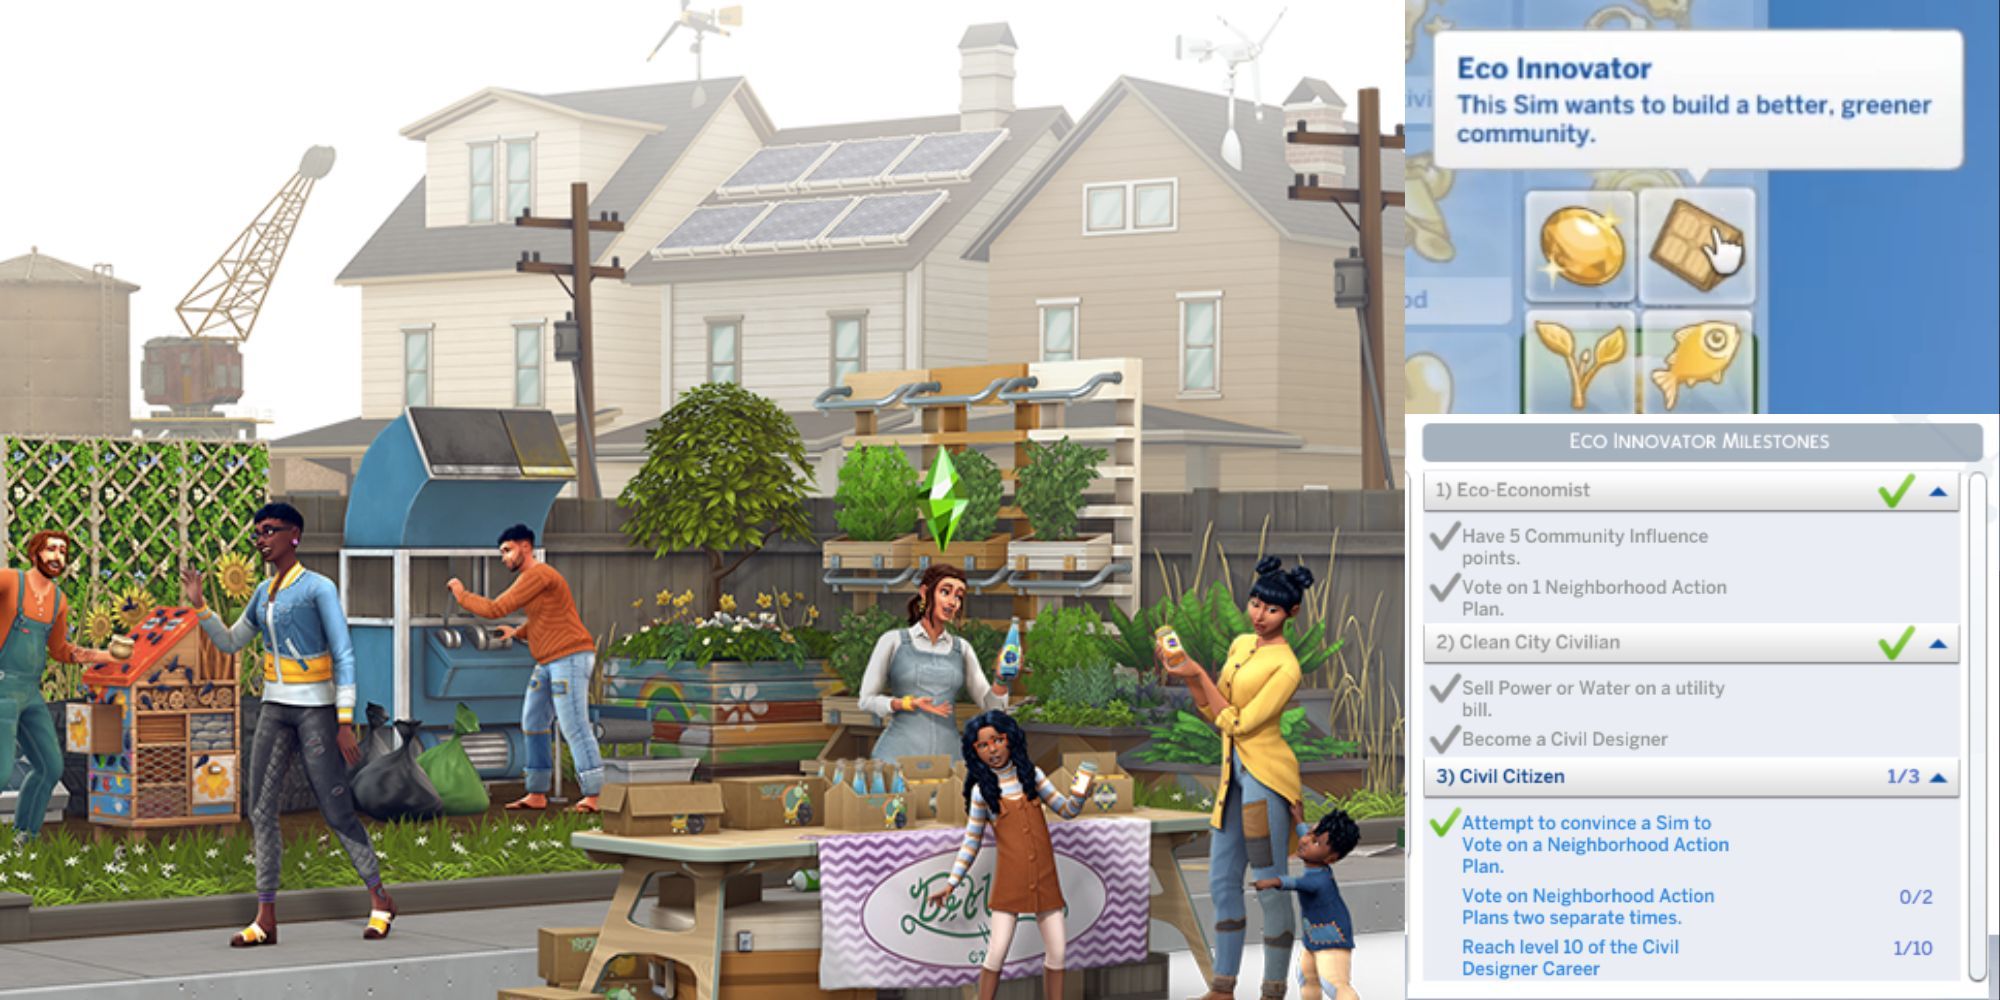 The Sims 4 Eco Innovator Aspiration